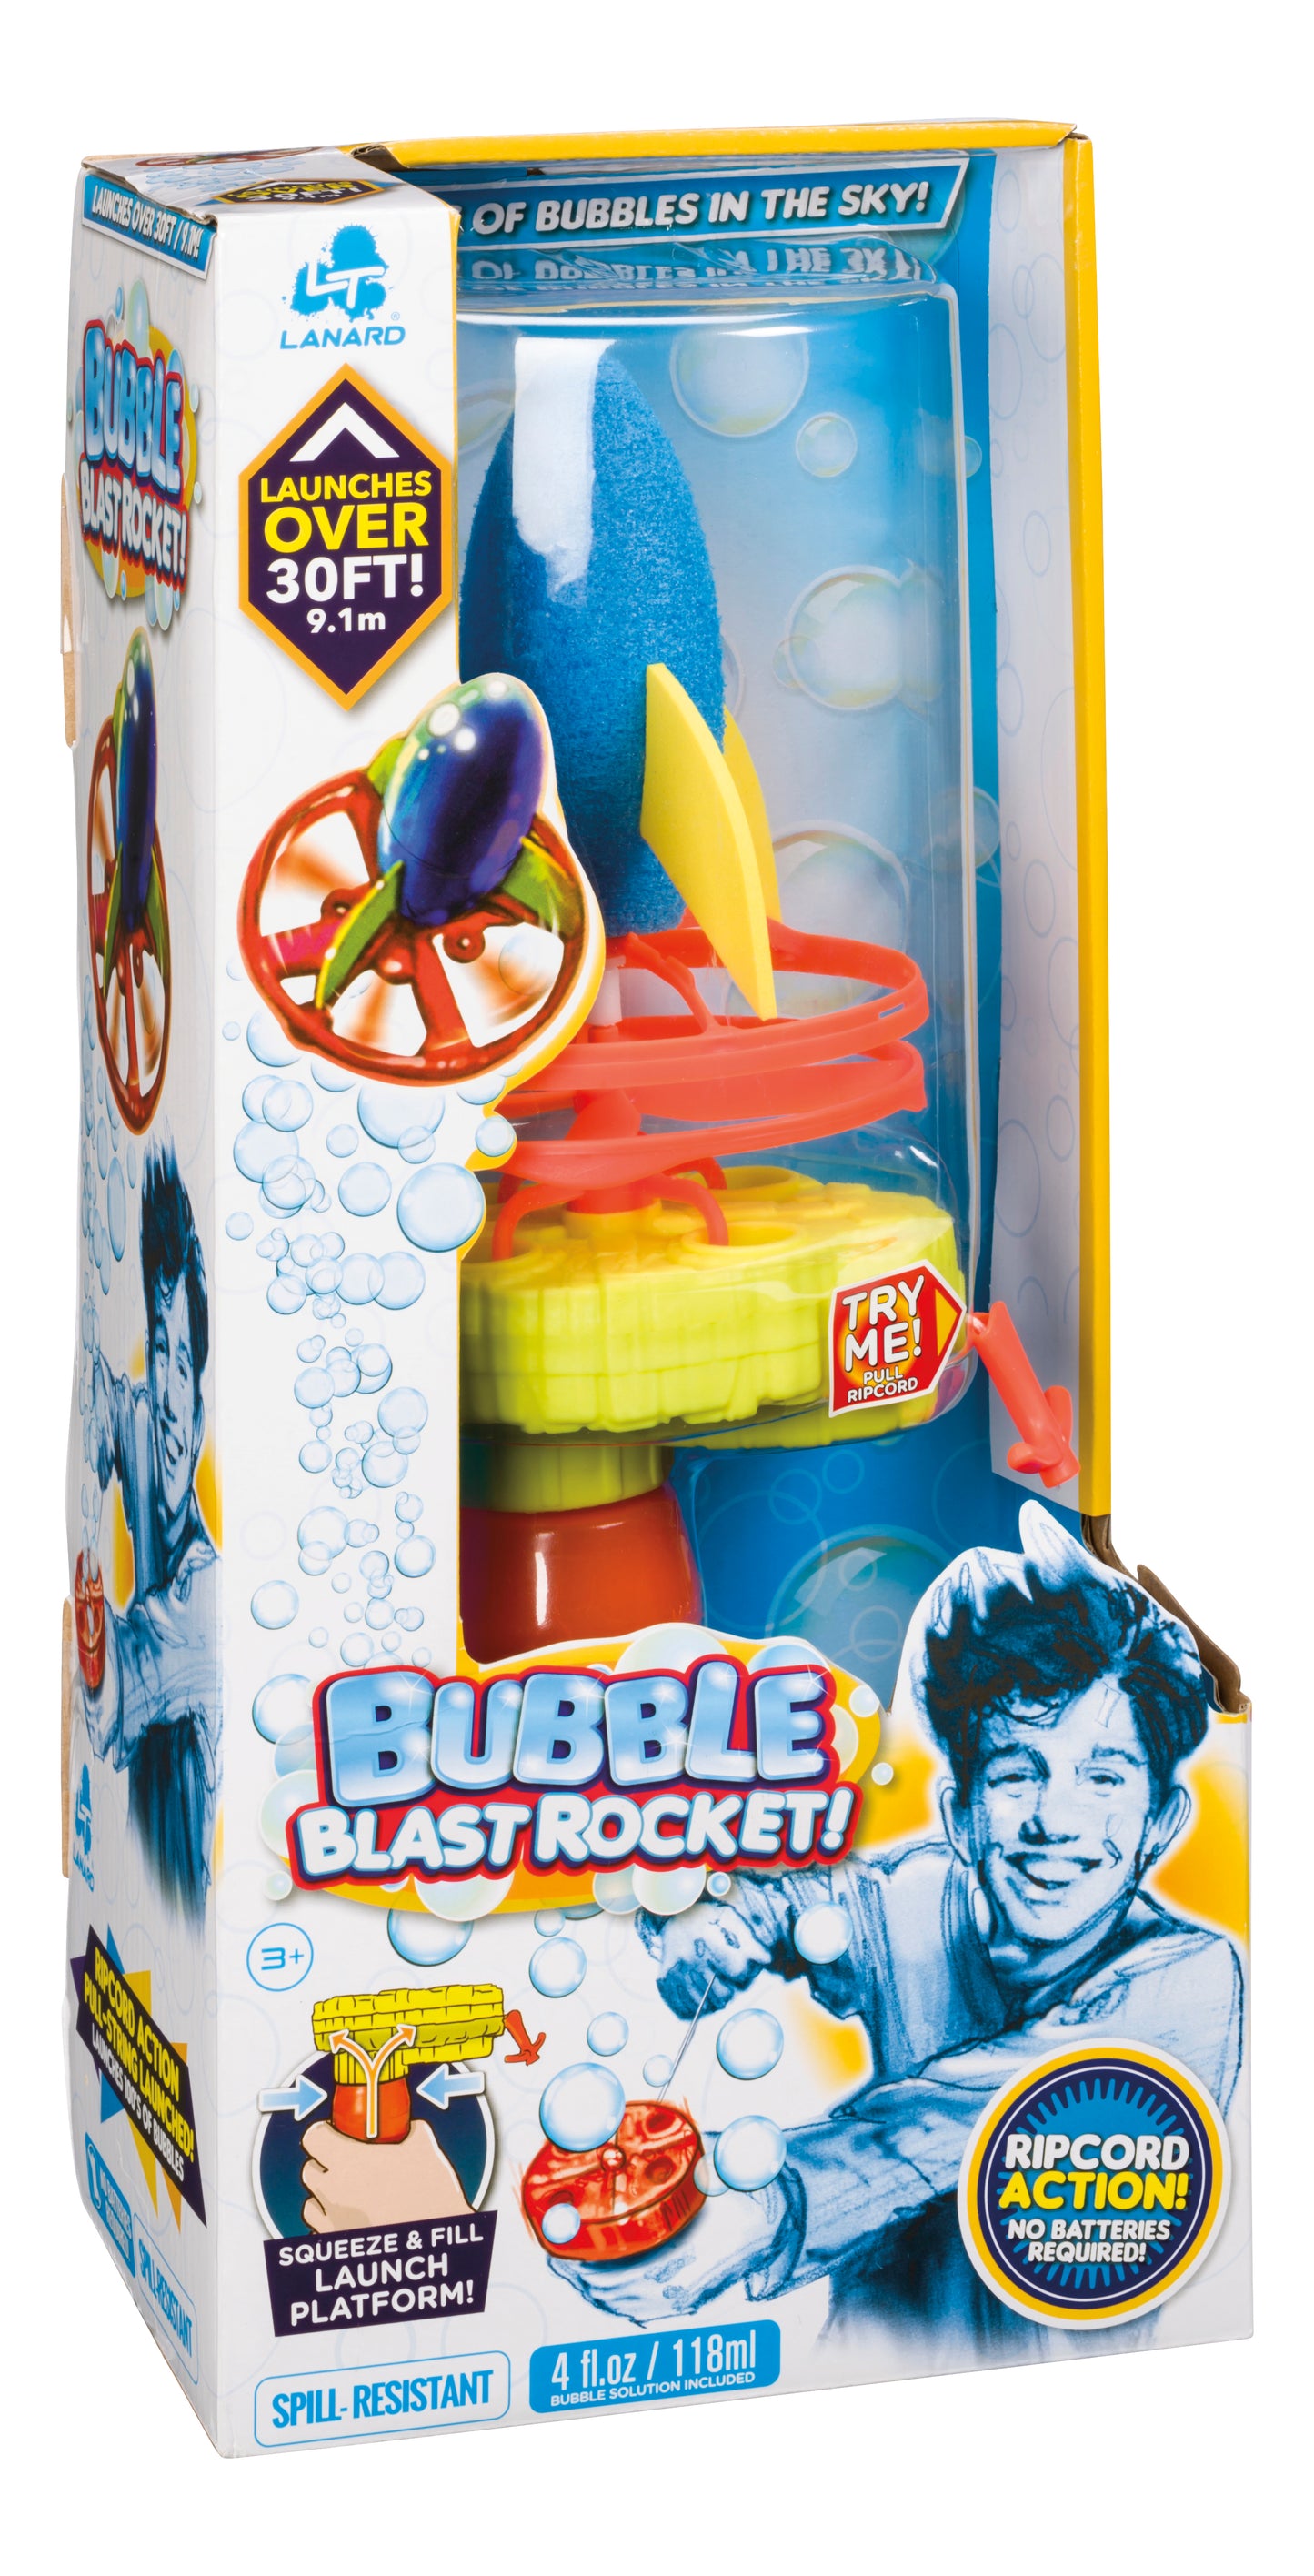 Lanard Bubble Blast Rocket